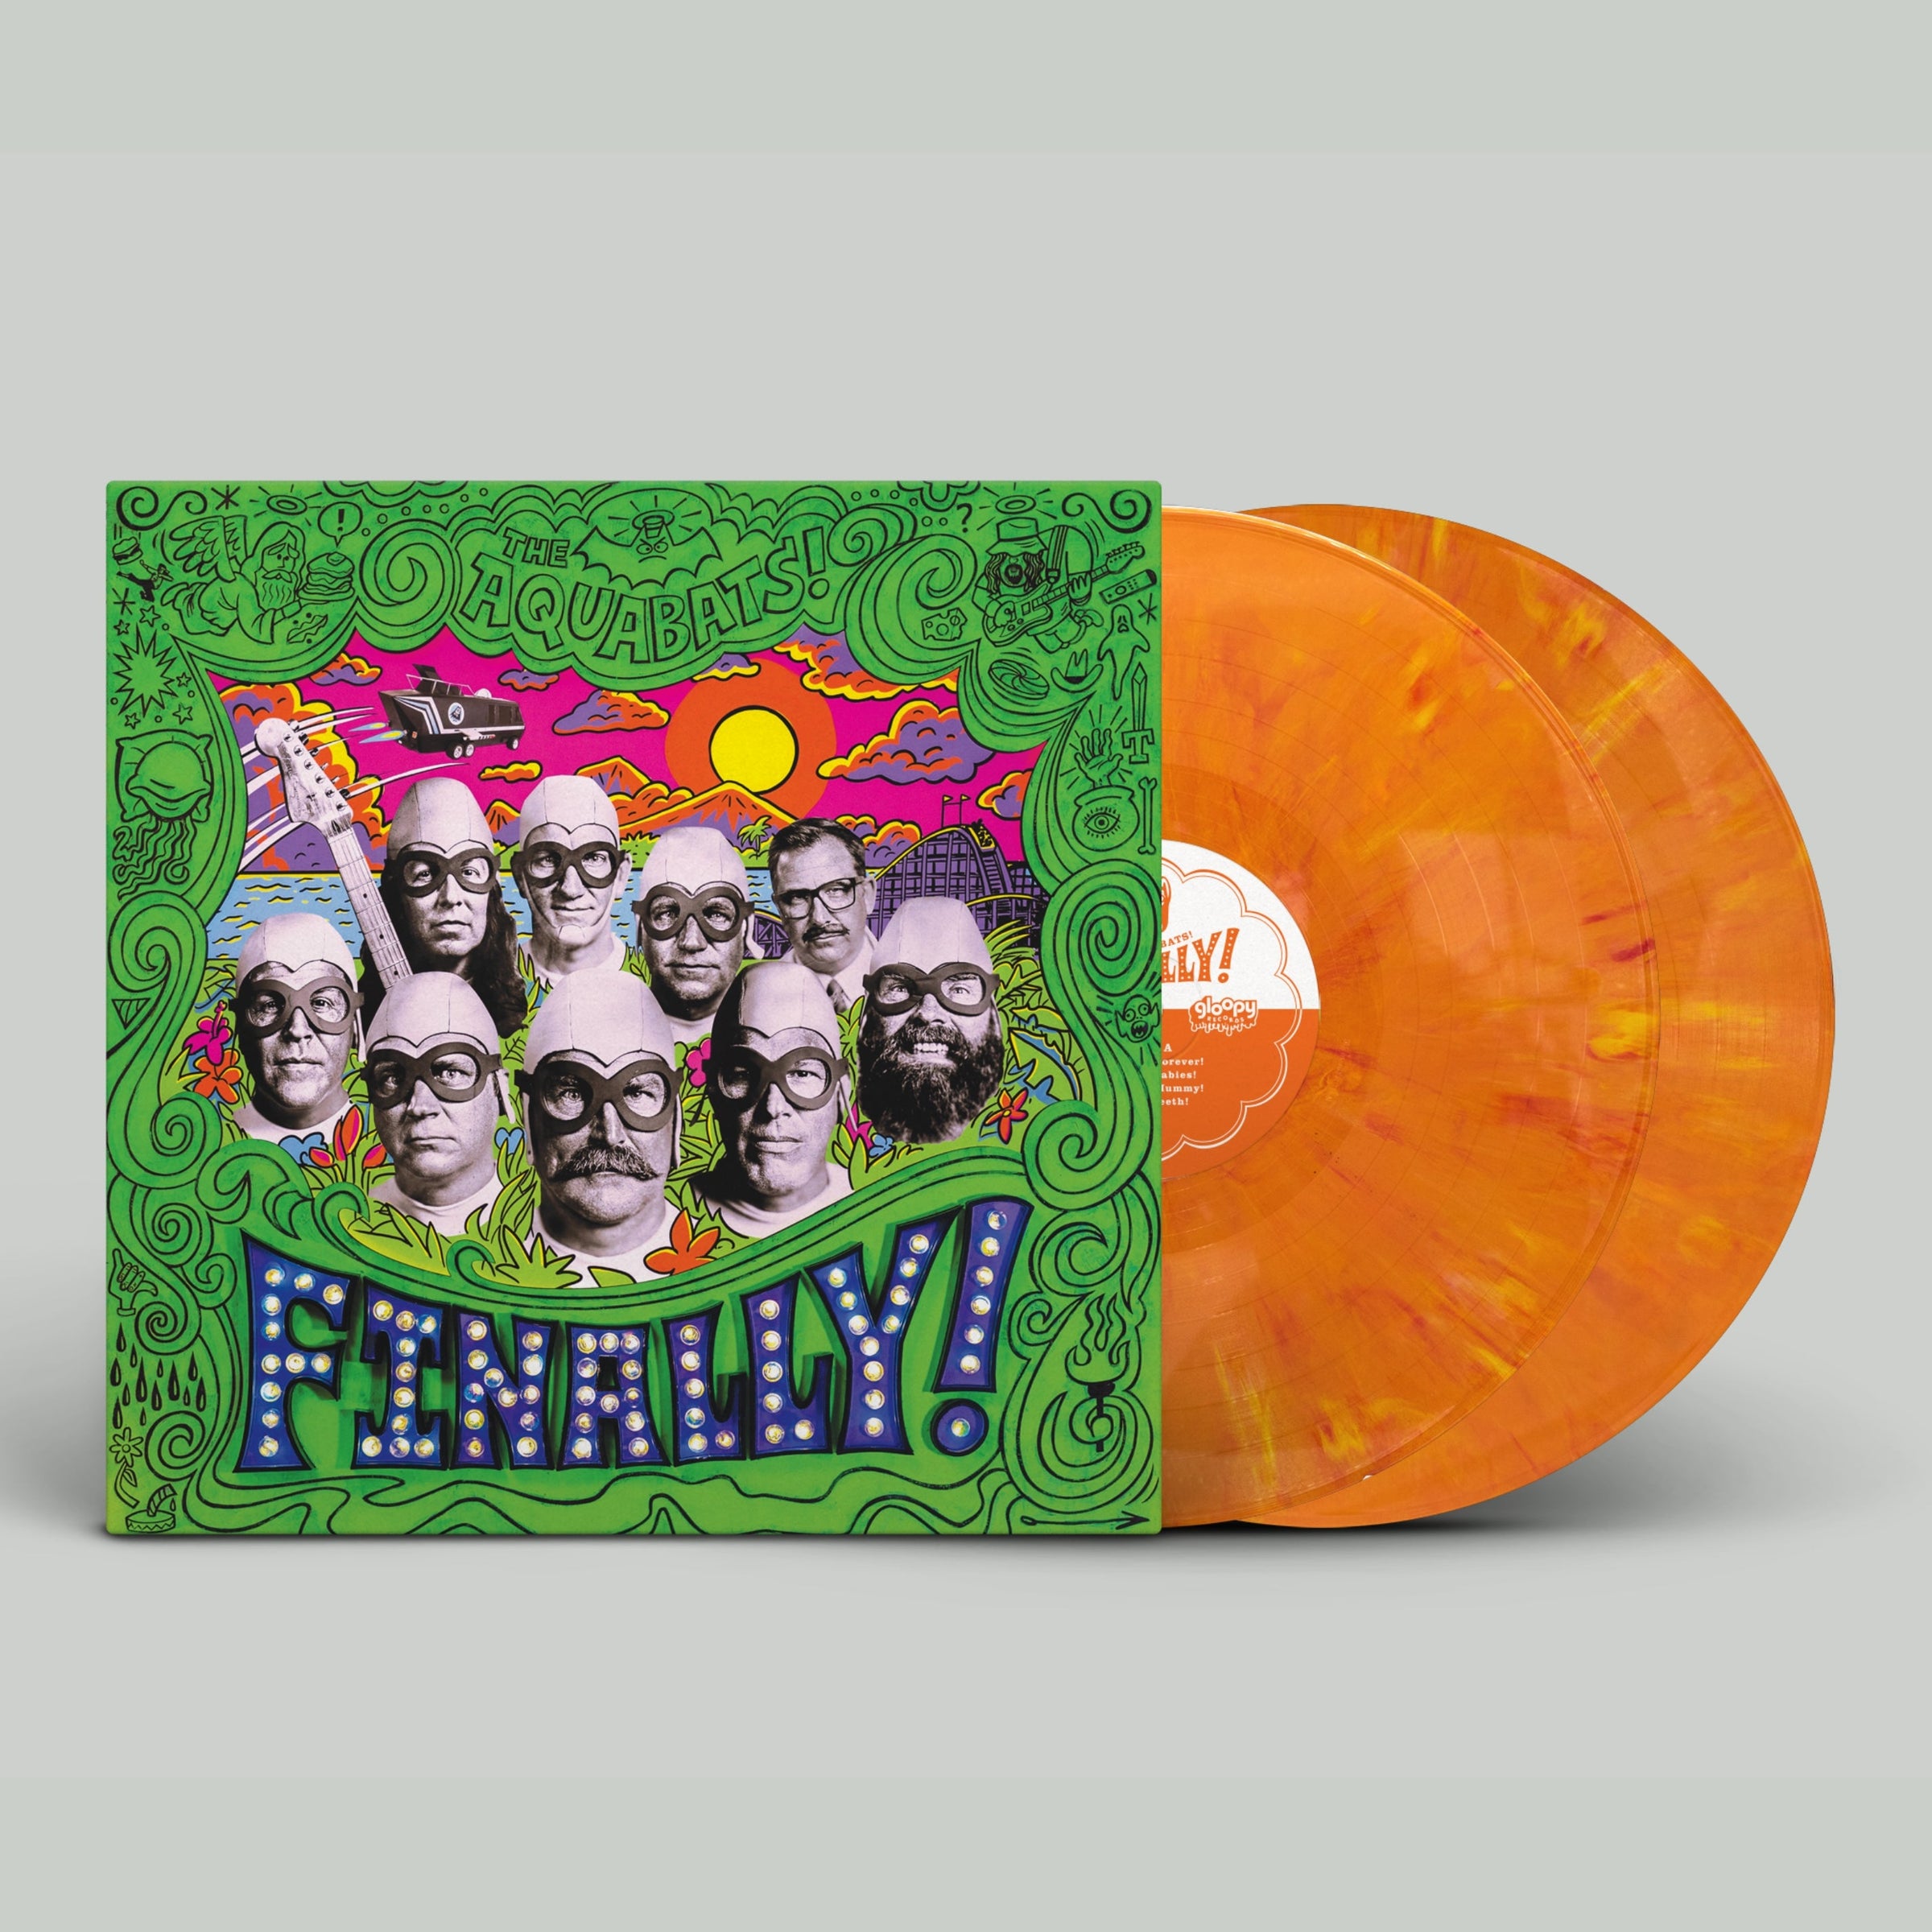 KICKSTARTER BACKER PRE-ORDER The Aquabats! Finally! gloopy-Exclusive Sunset Orange Double LP